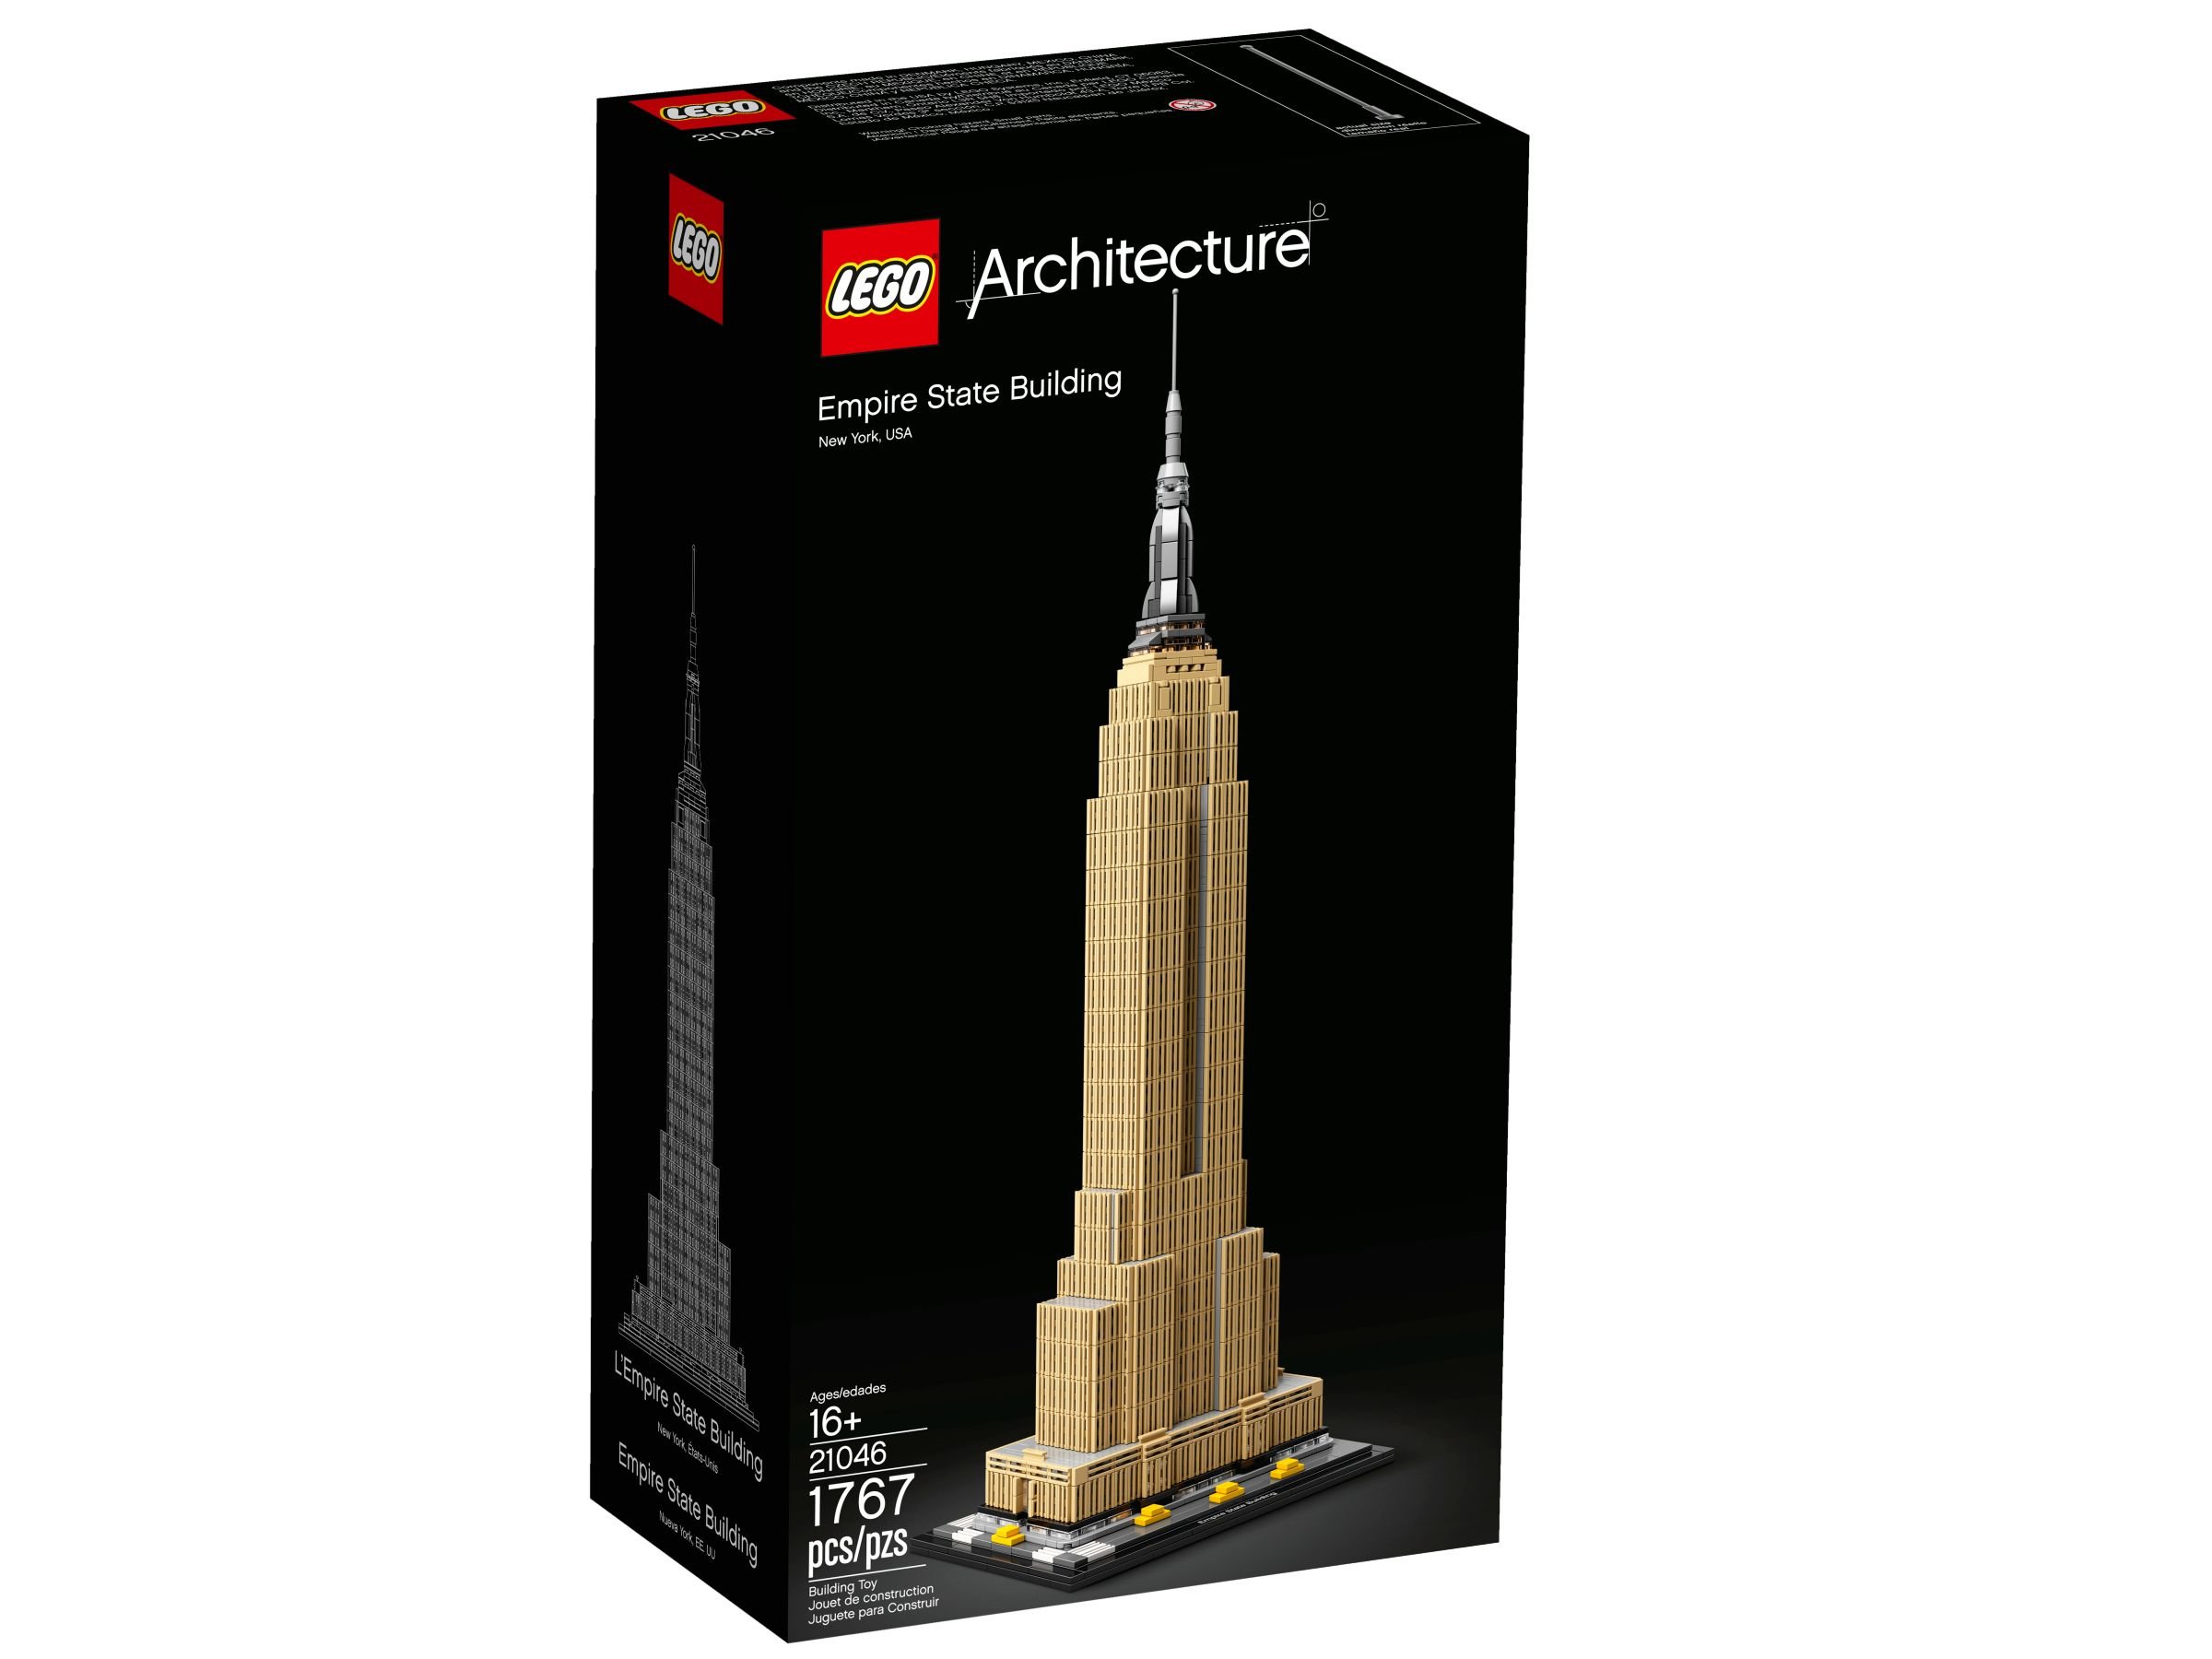 LEGO Architecture 21046 Empire State Building LEGO_21046_alt1.jpg